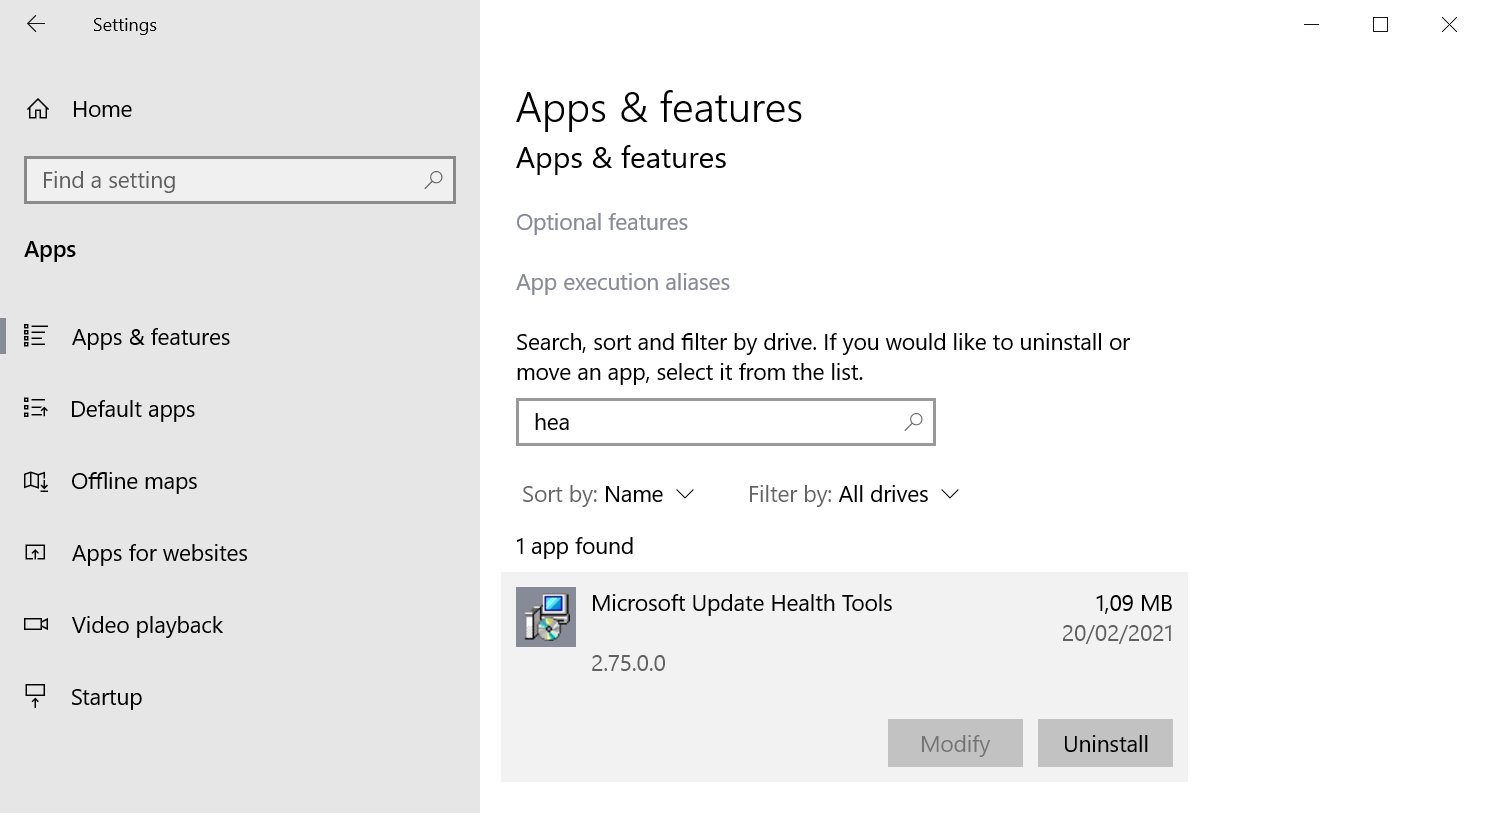 Is the Windows 10 app Microsoft Update Health Tools legitimate? microsoft-update-health-tools.png